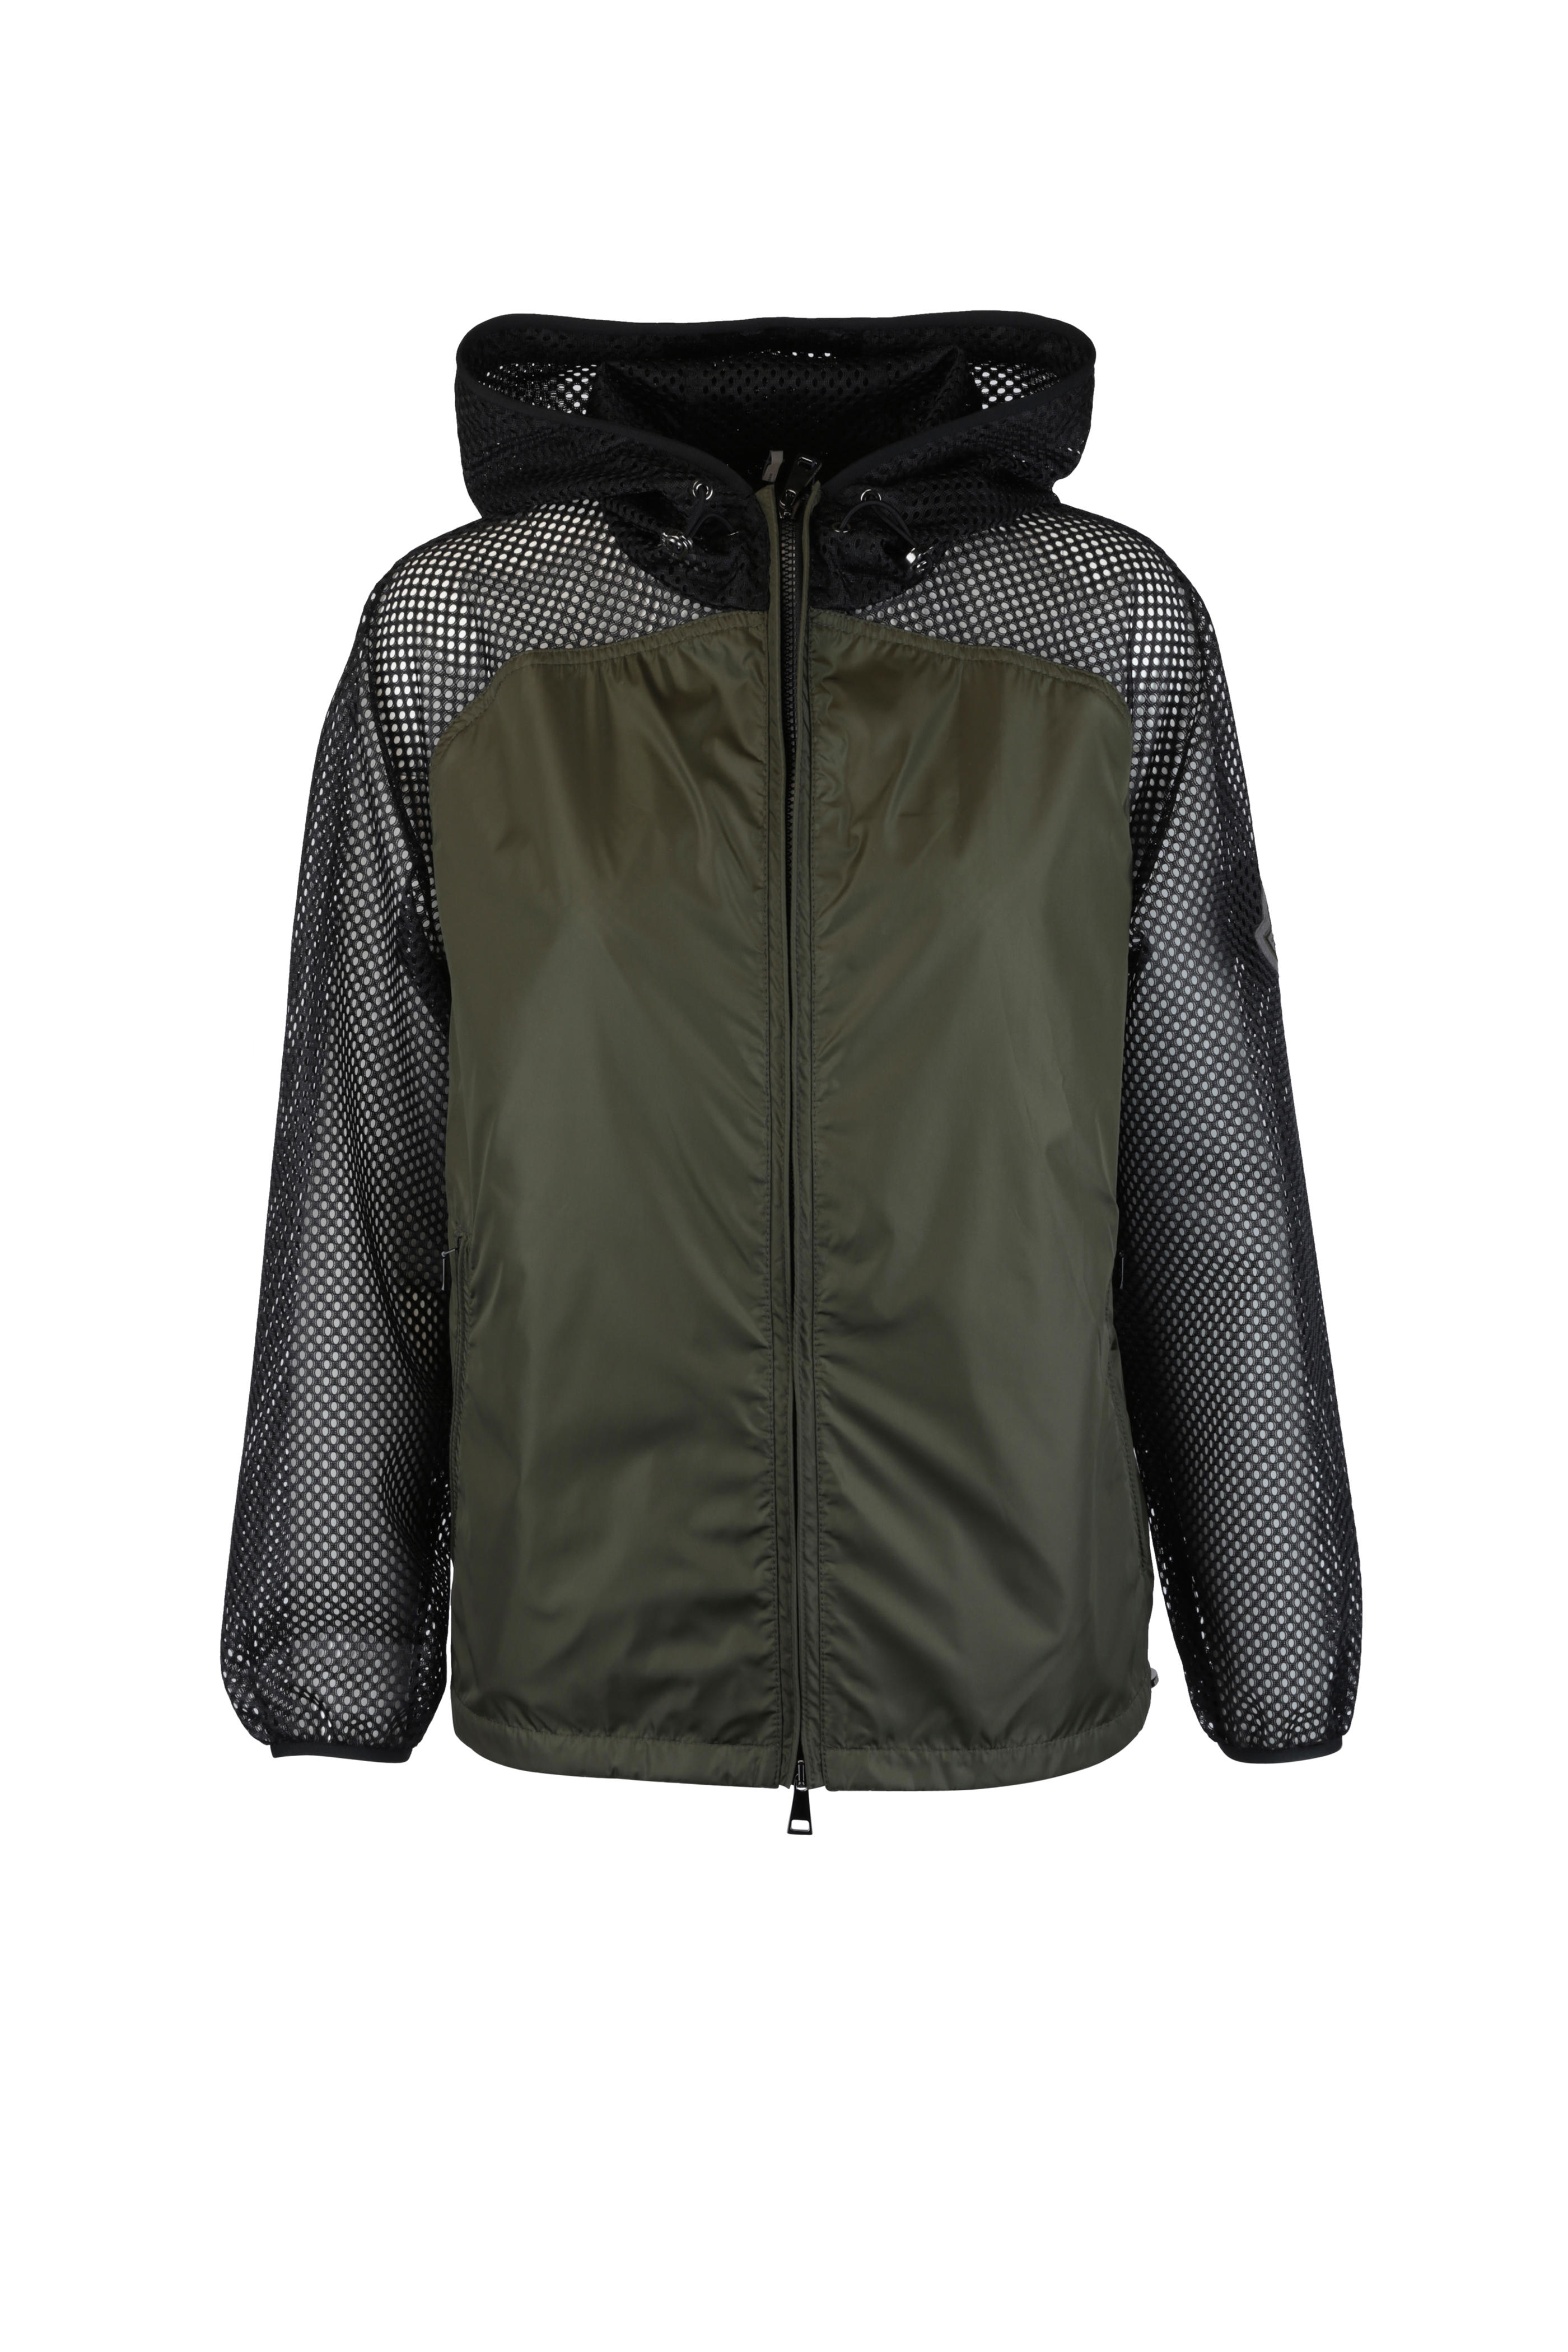 Moncler - Green & Black Nylon & Mesh Windbreaker Jacket